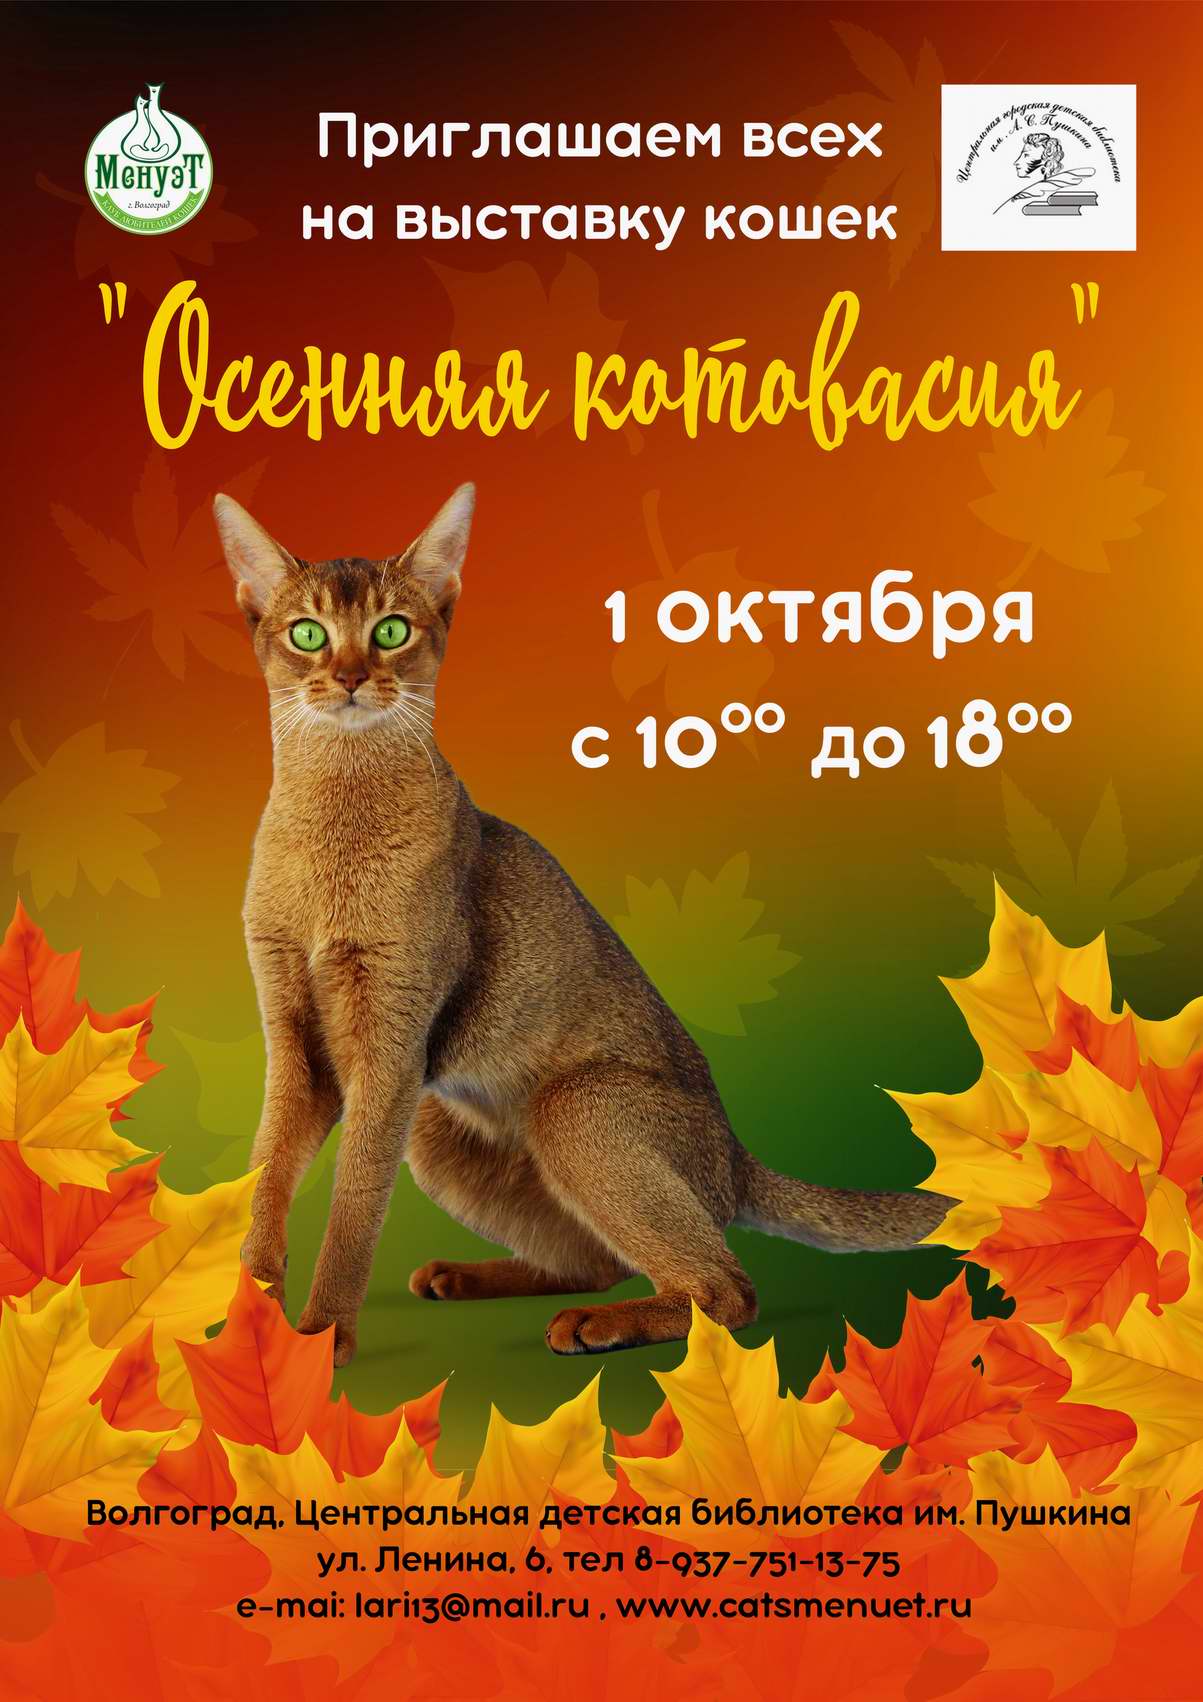 Национальная выставка кошек Осення котовасия Волгоград